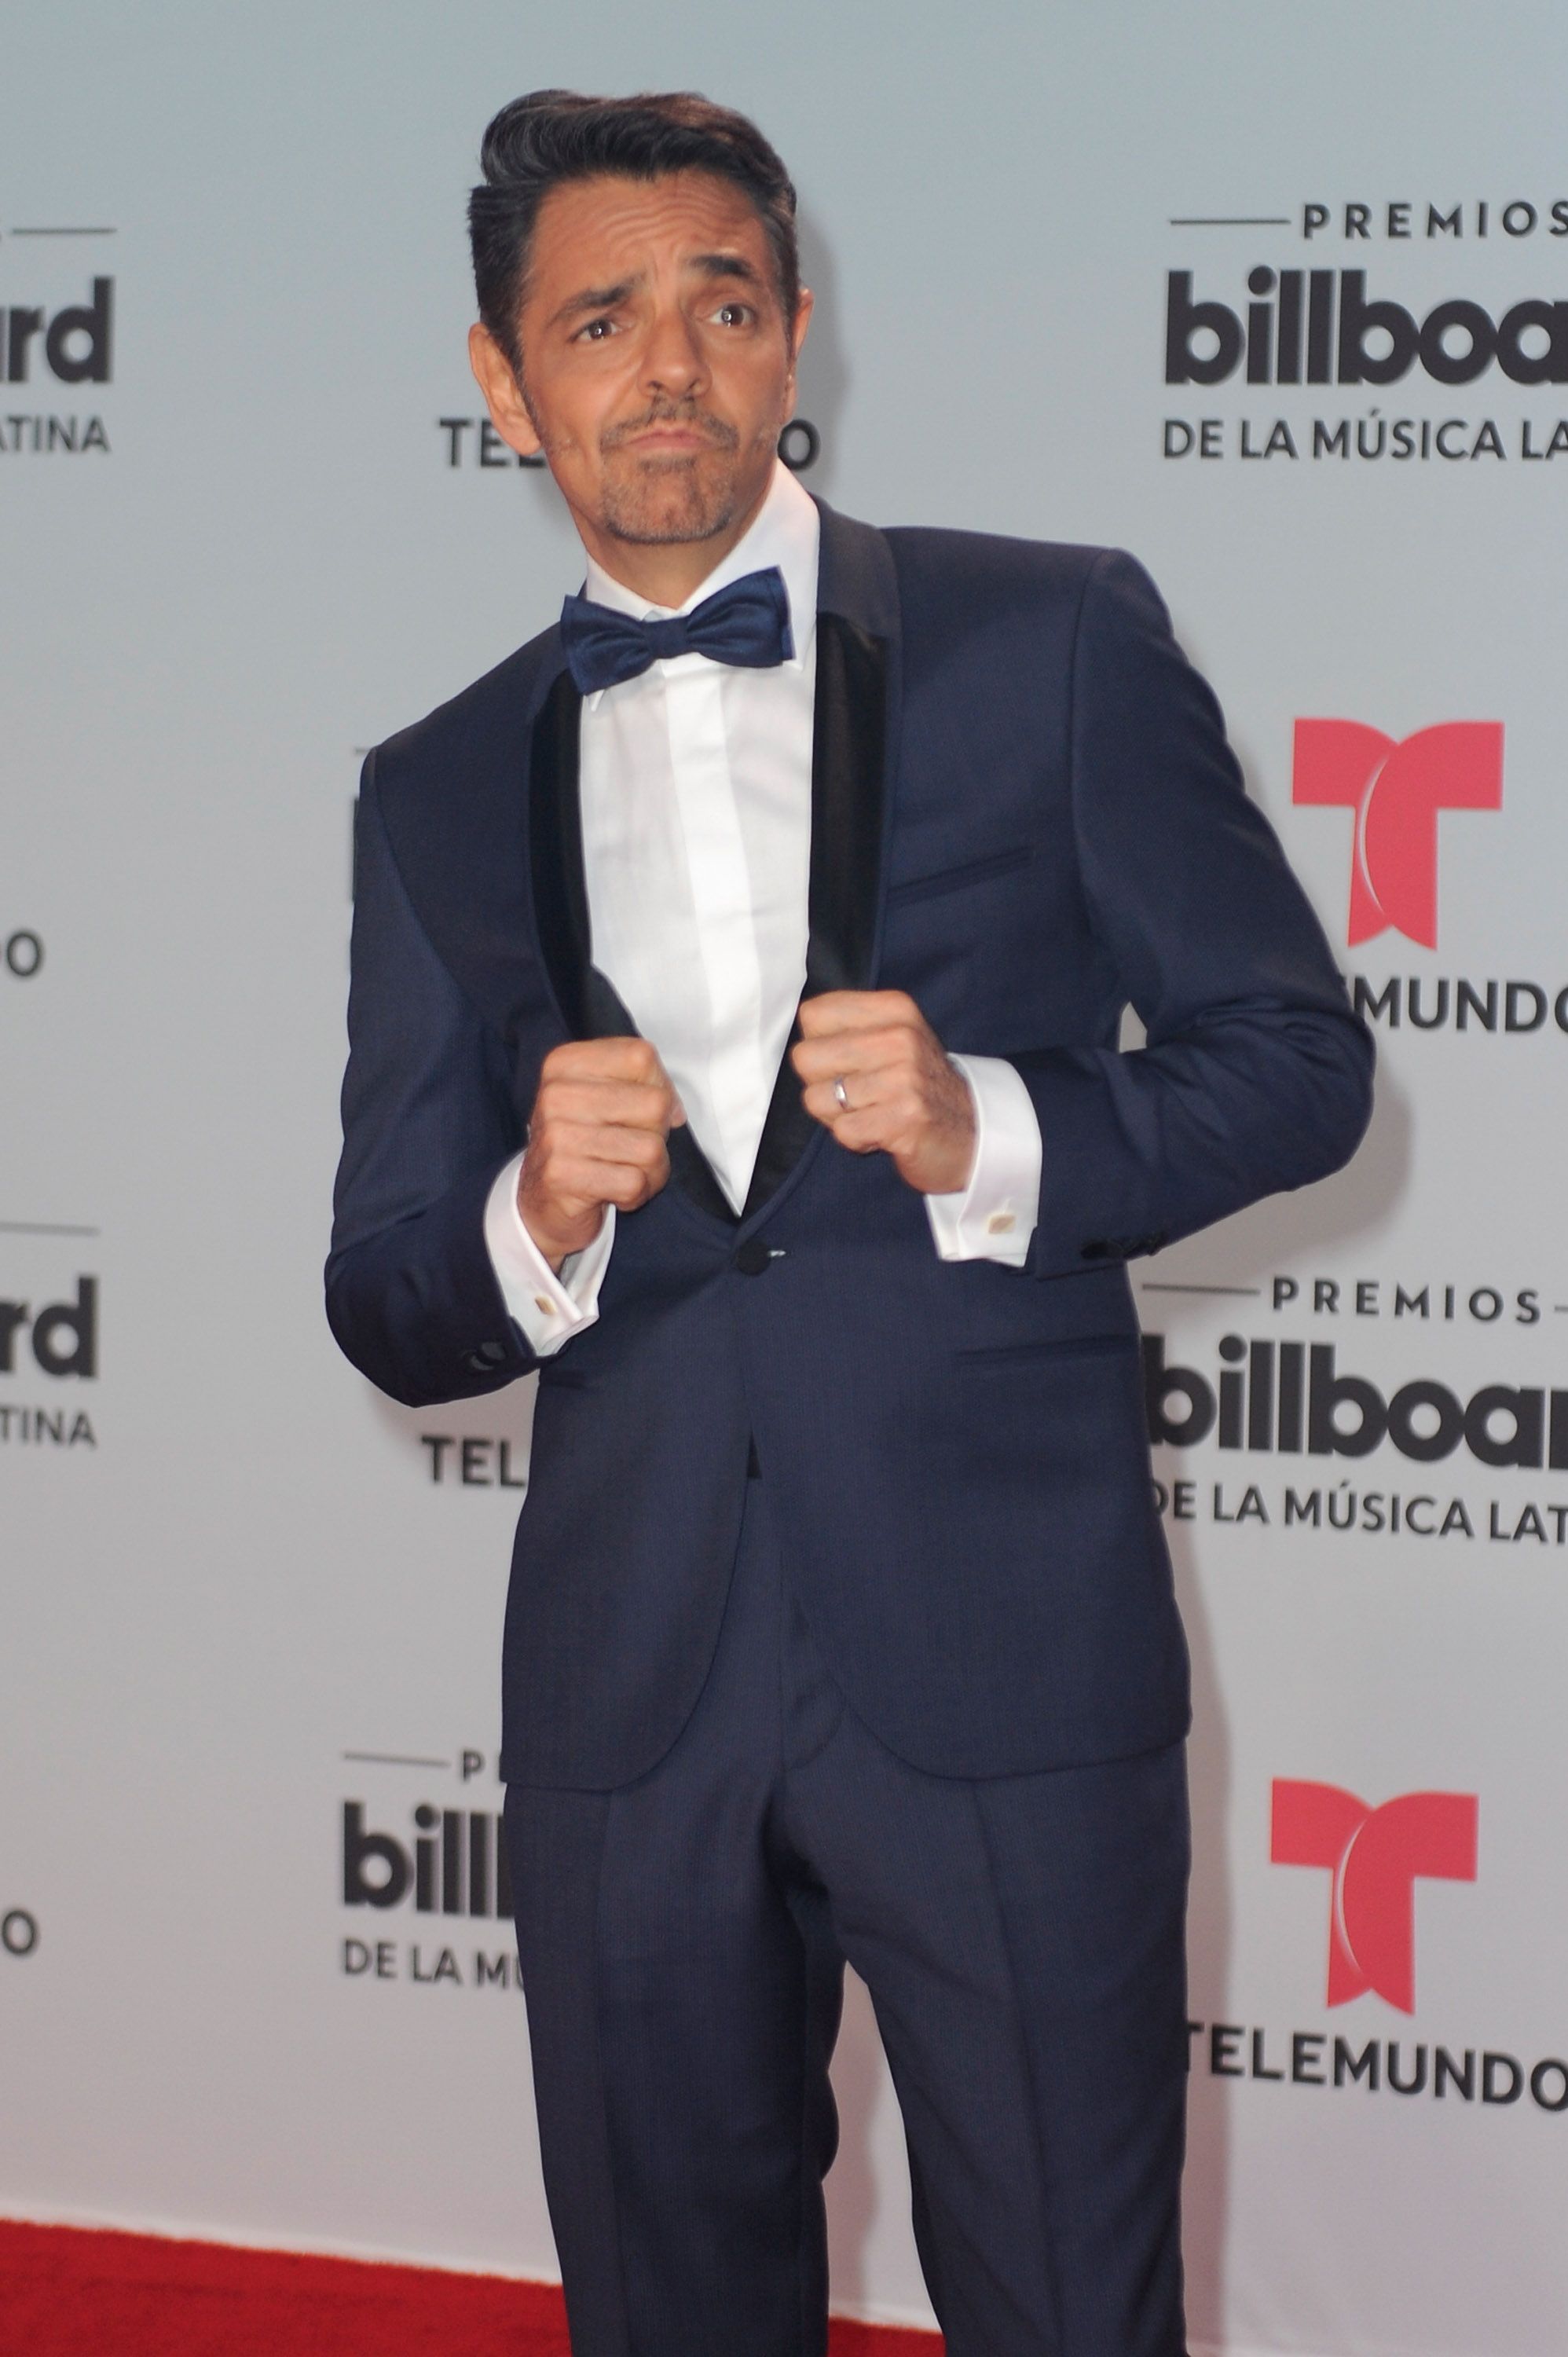 Premios Billboard 2017 Red Carpet Photos Eugenio Derbez